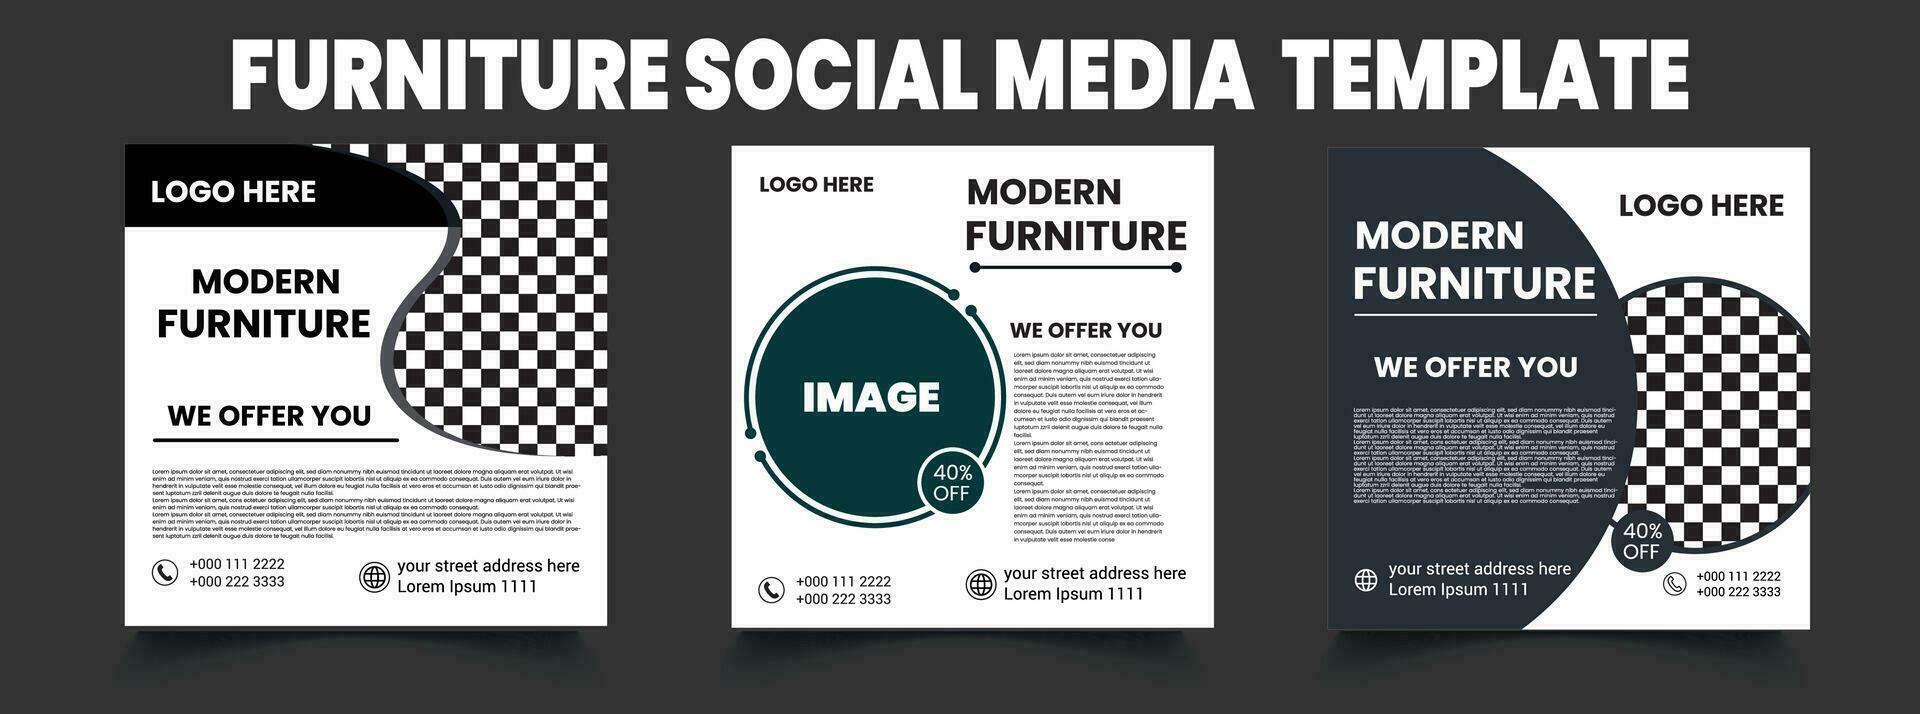 Furniture social media template Design. vector